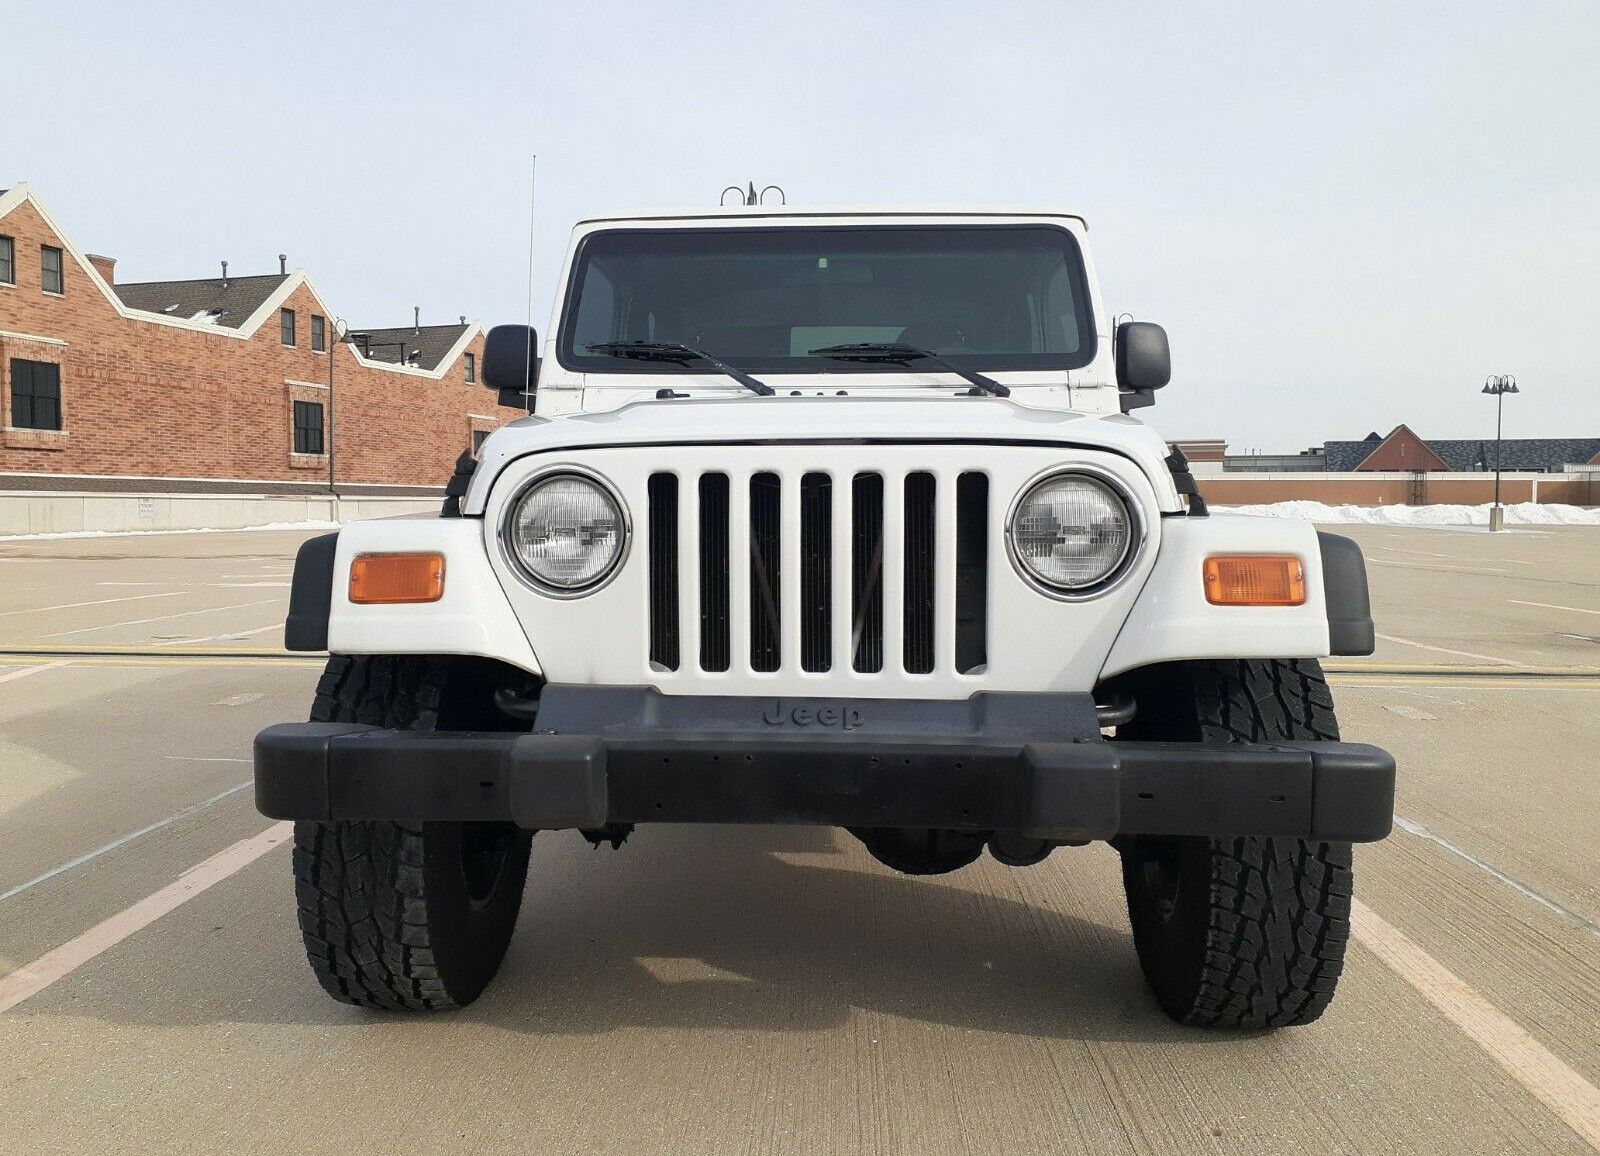 02 Jeep Wrangler Performance Vehicle$1000